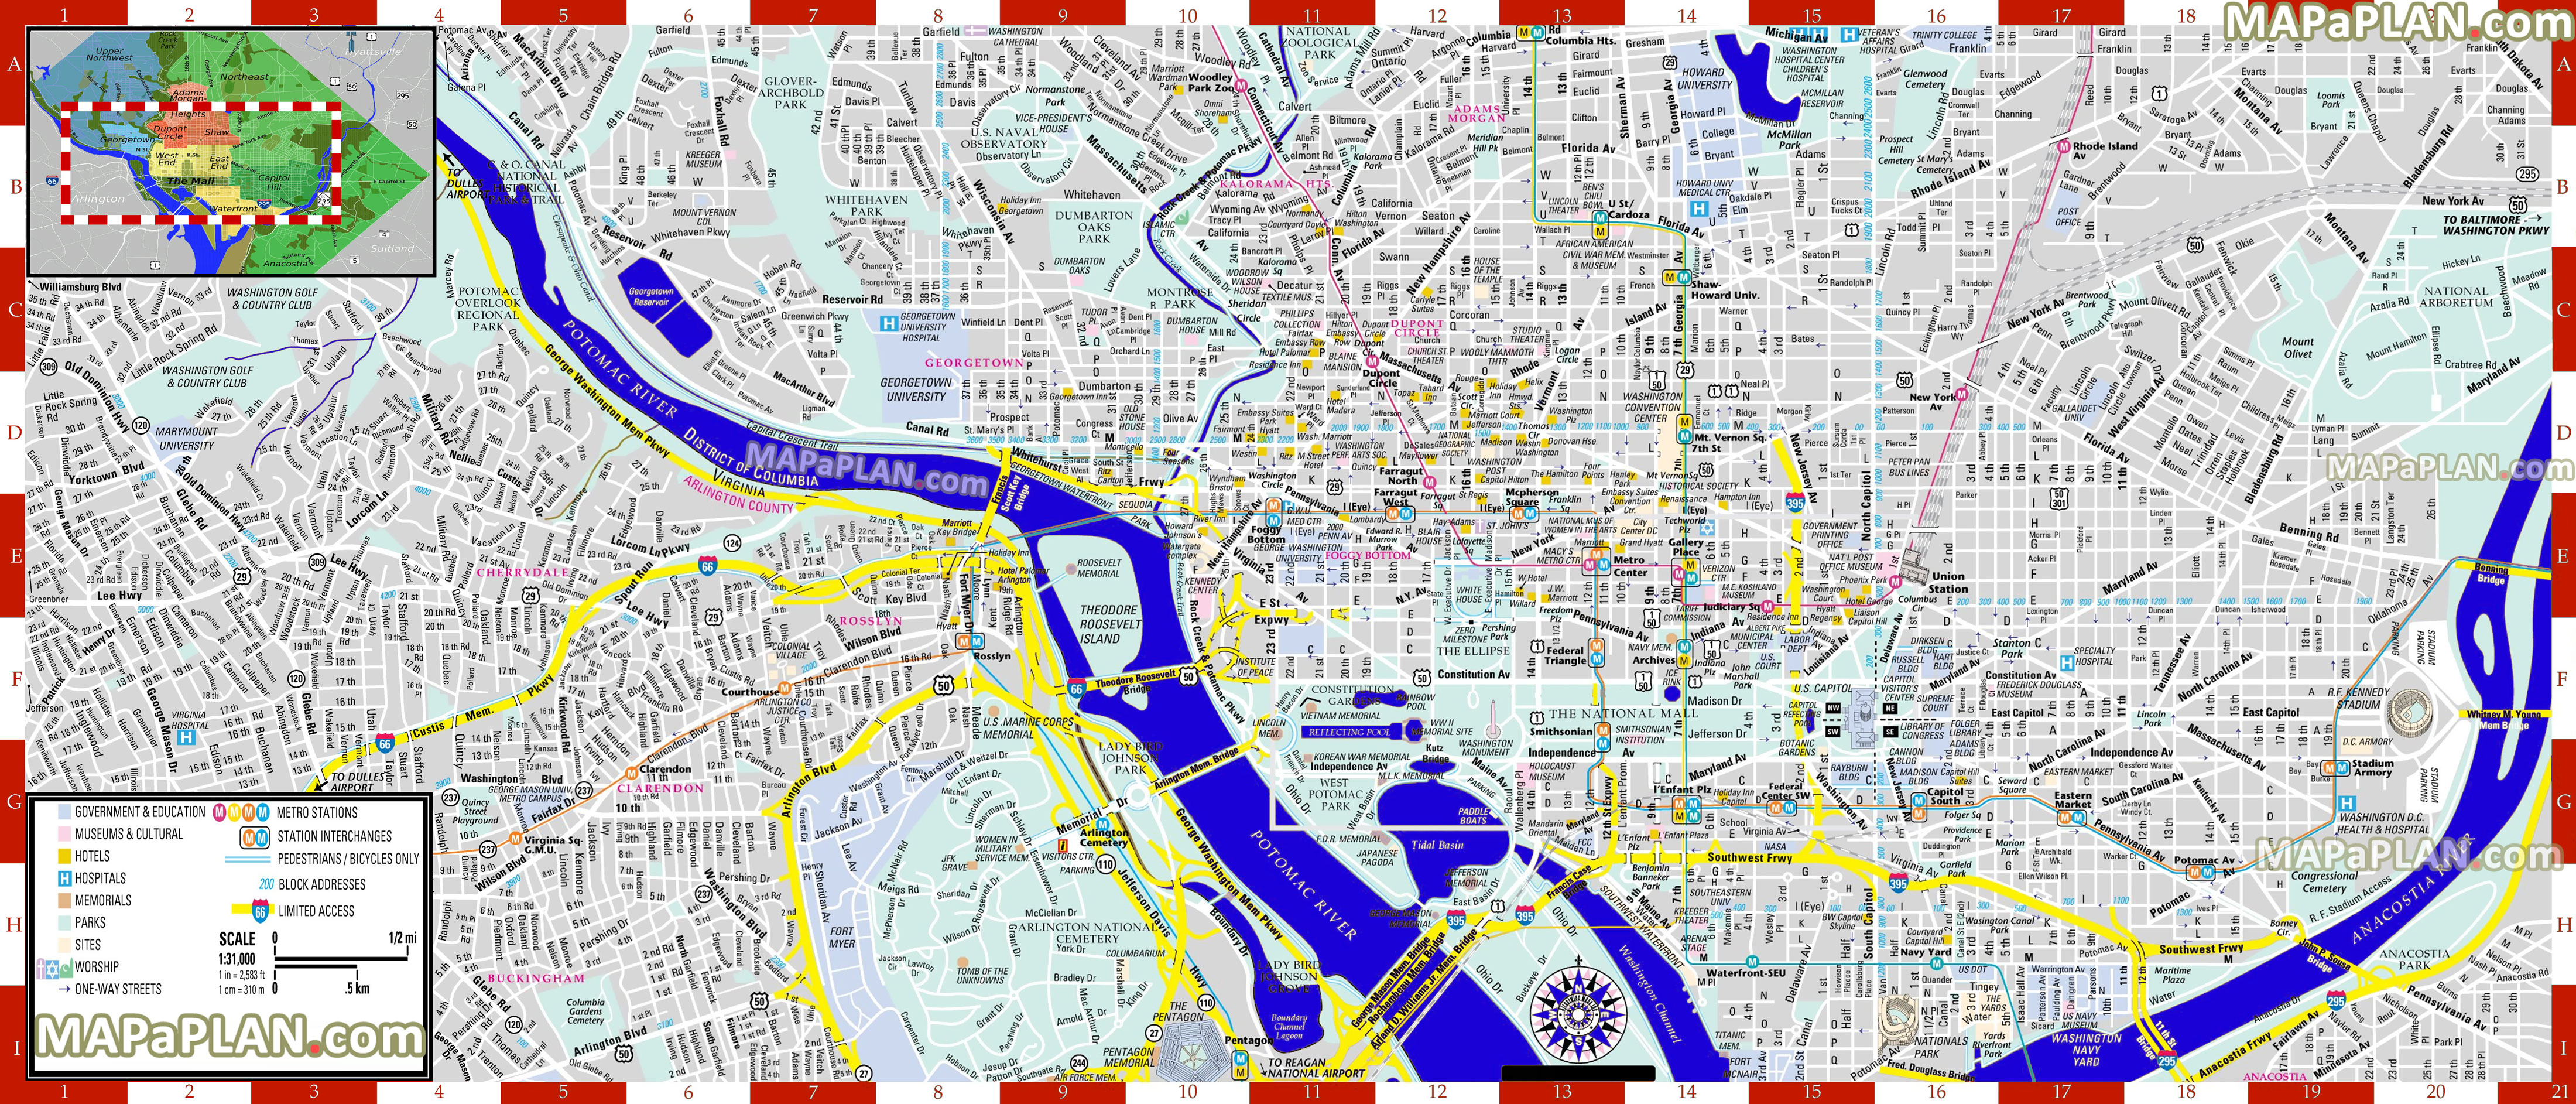 Washington Dc Maps - Top Tourist Attractions - Free, Printable City - Printable Map Of Washington Dc Attractions